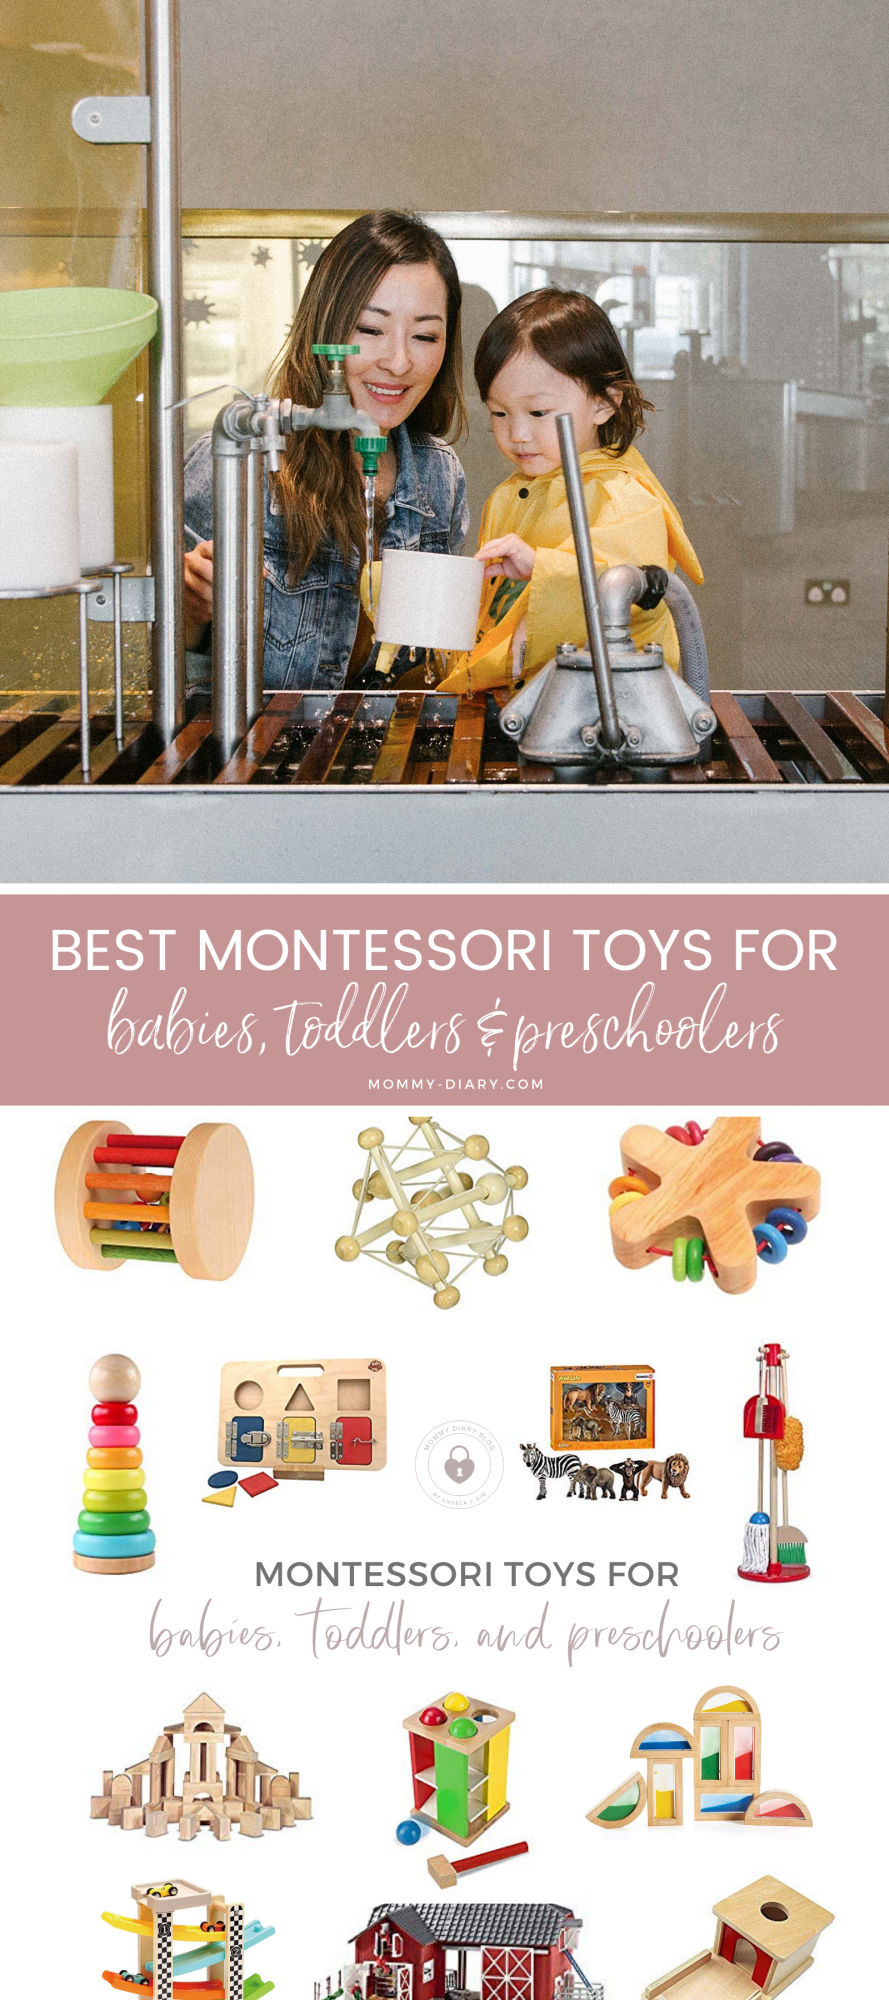 Best Montessori toys